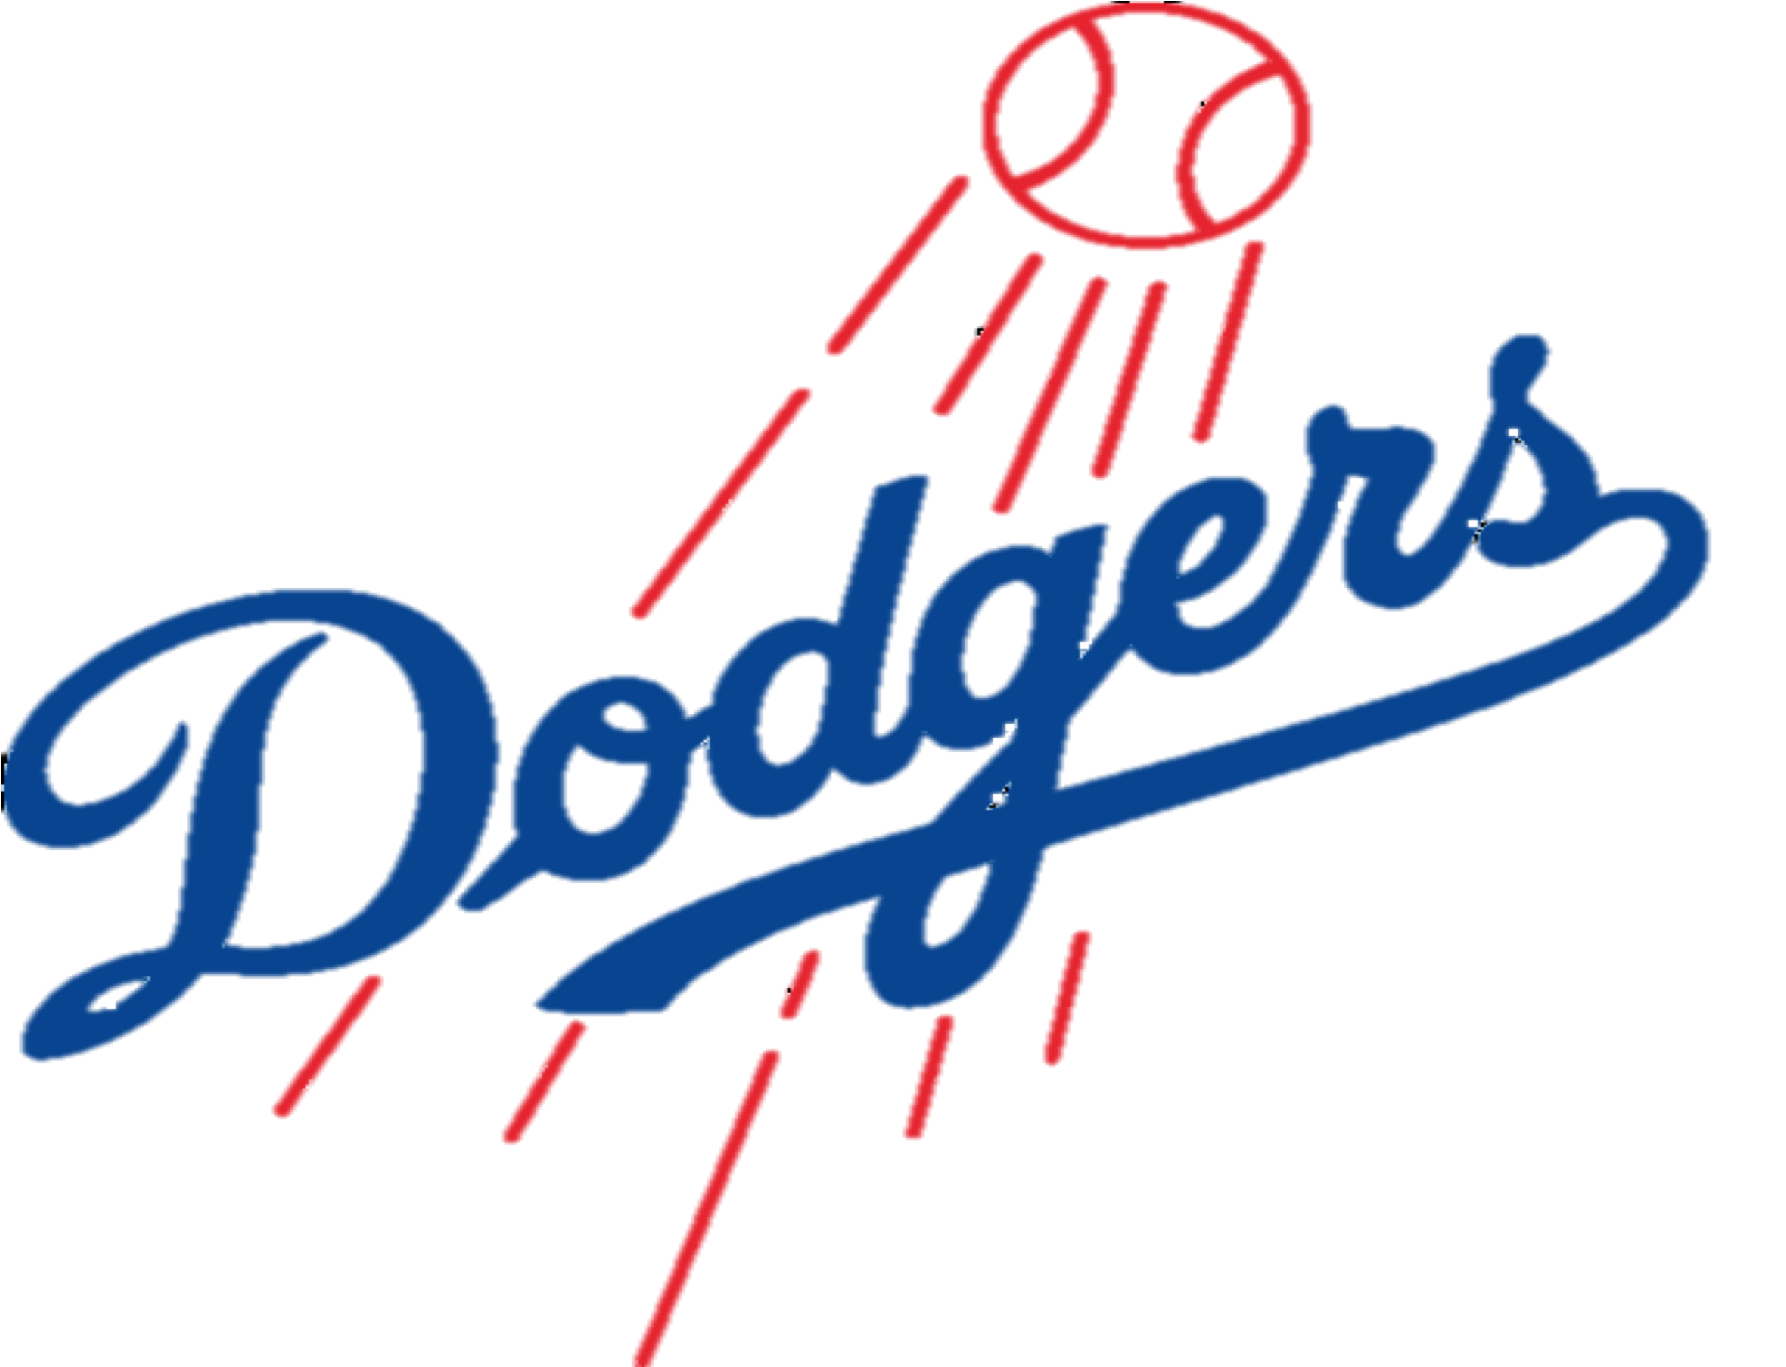 Baseball Logos